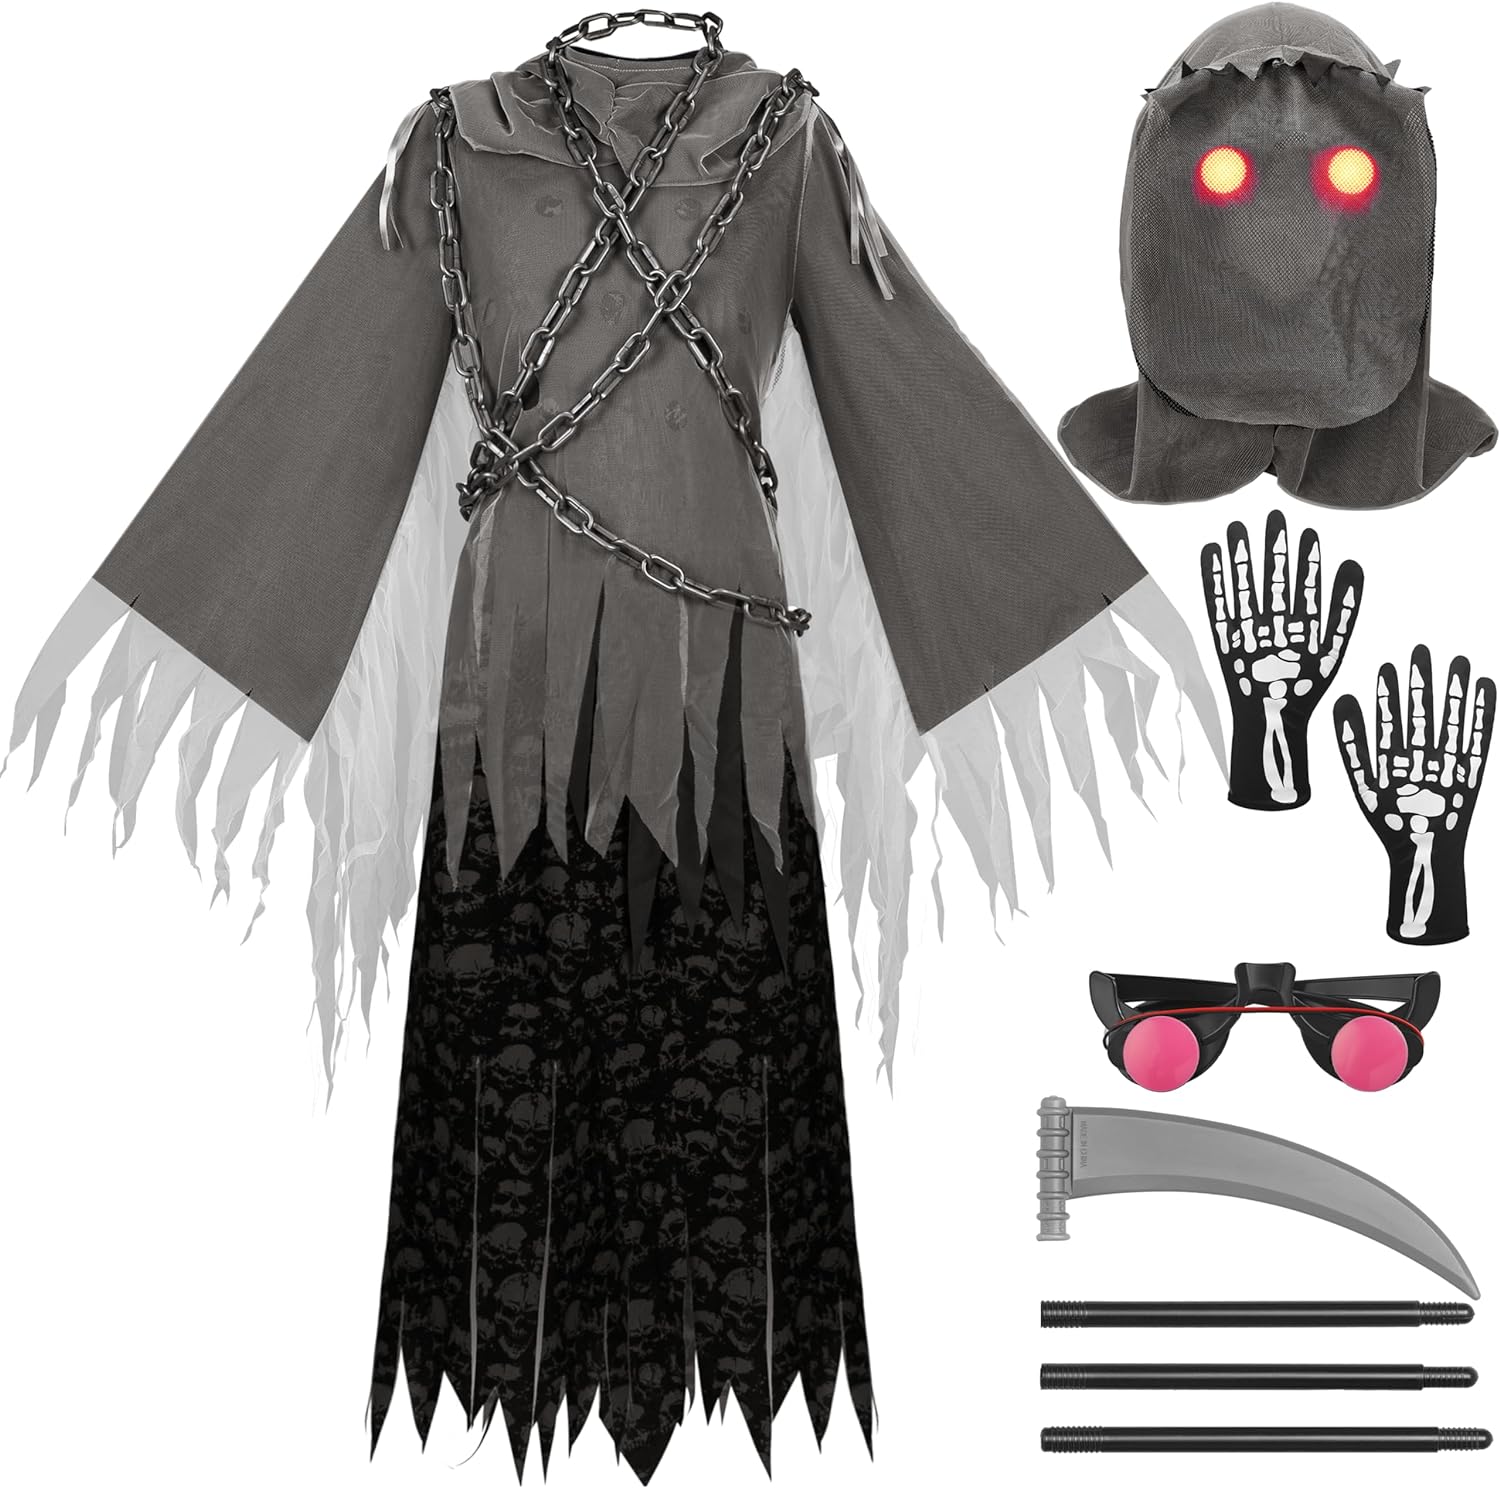 Spooktacular Grim Reaper Costume Review | Conscious Buys